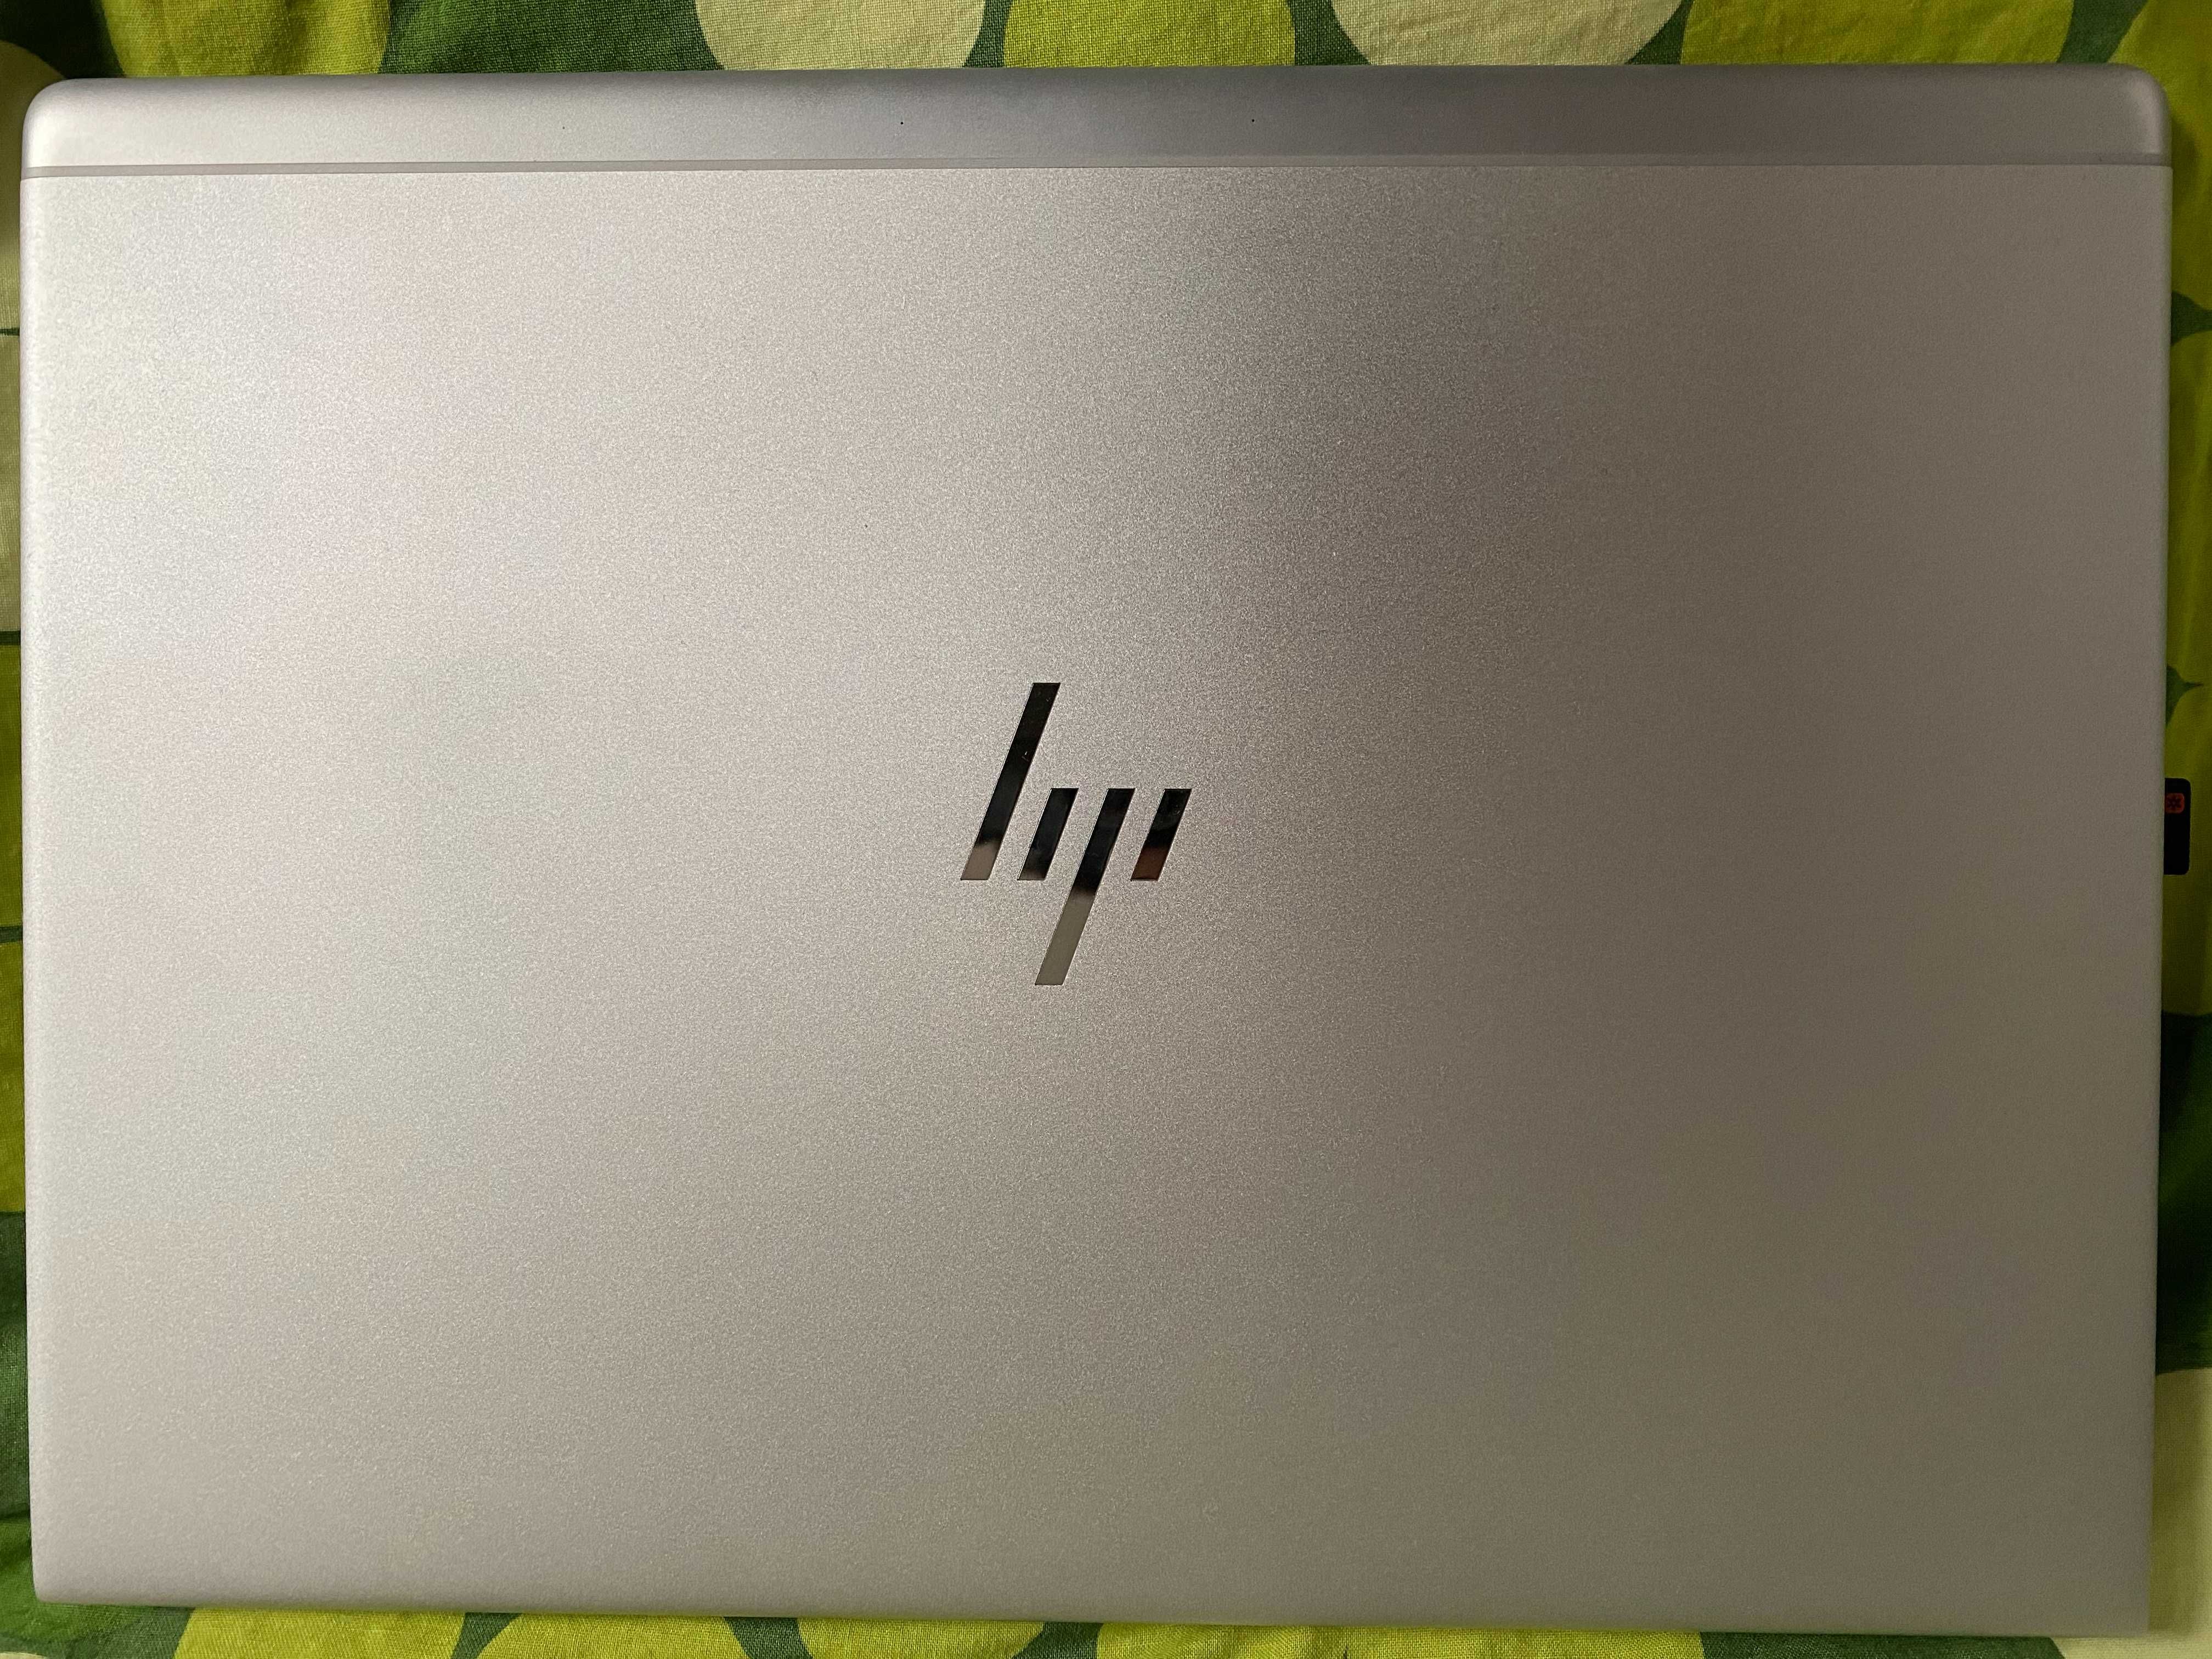 HP EliteBook 830 G5 + stacja dokująca HP